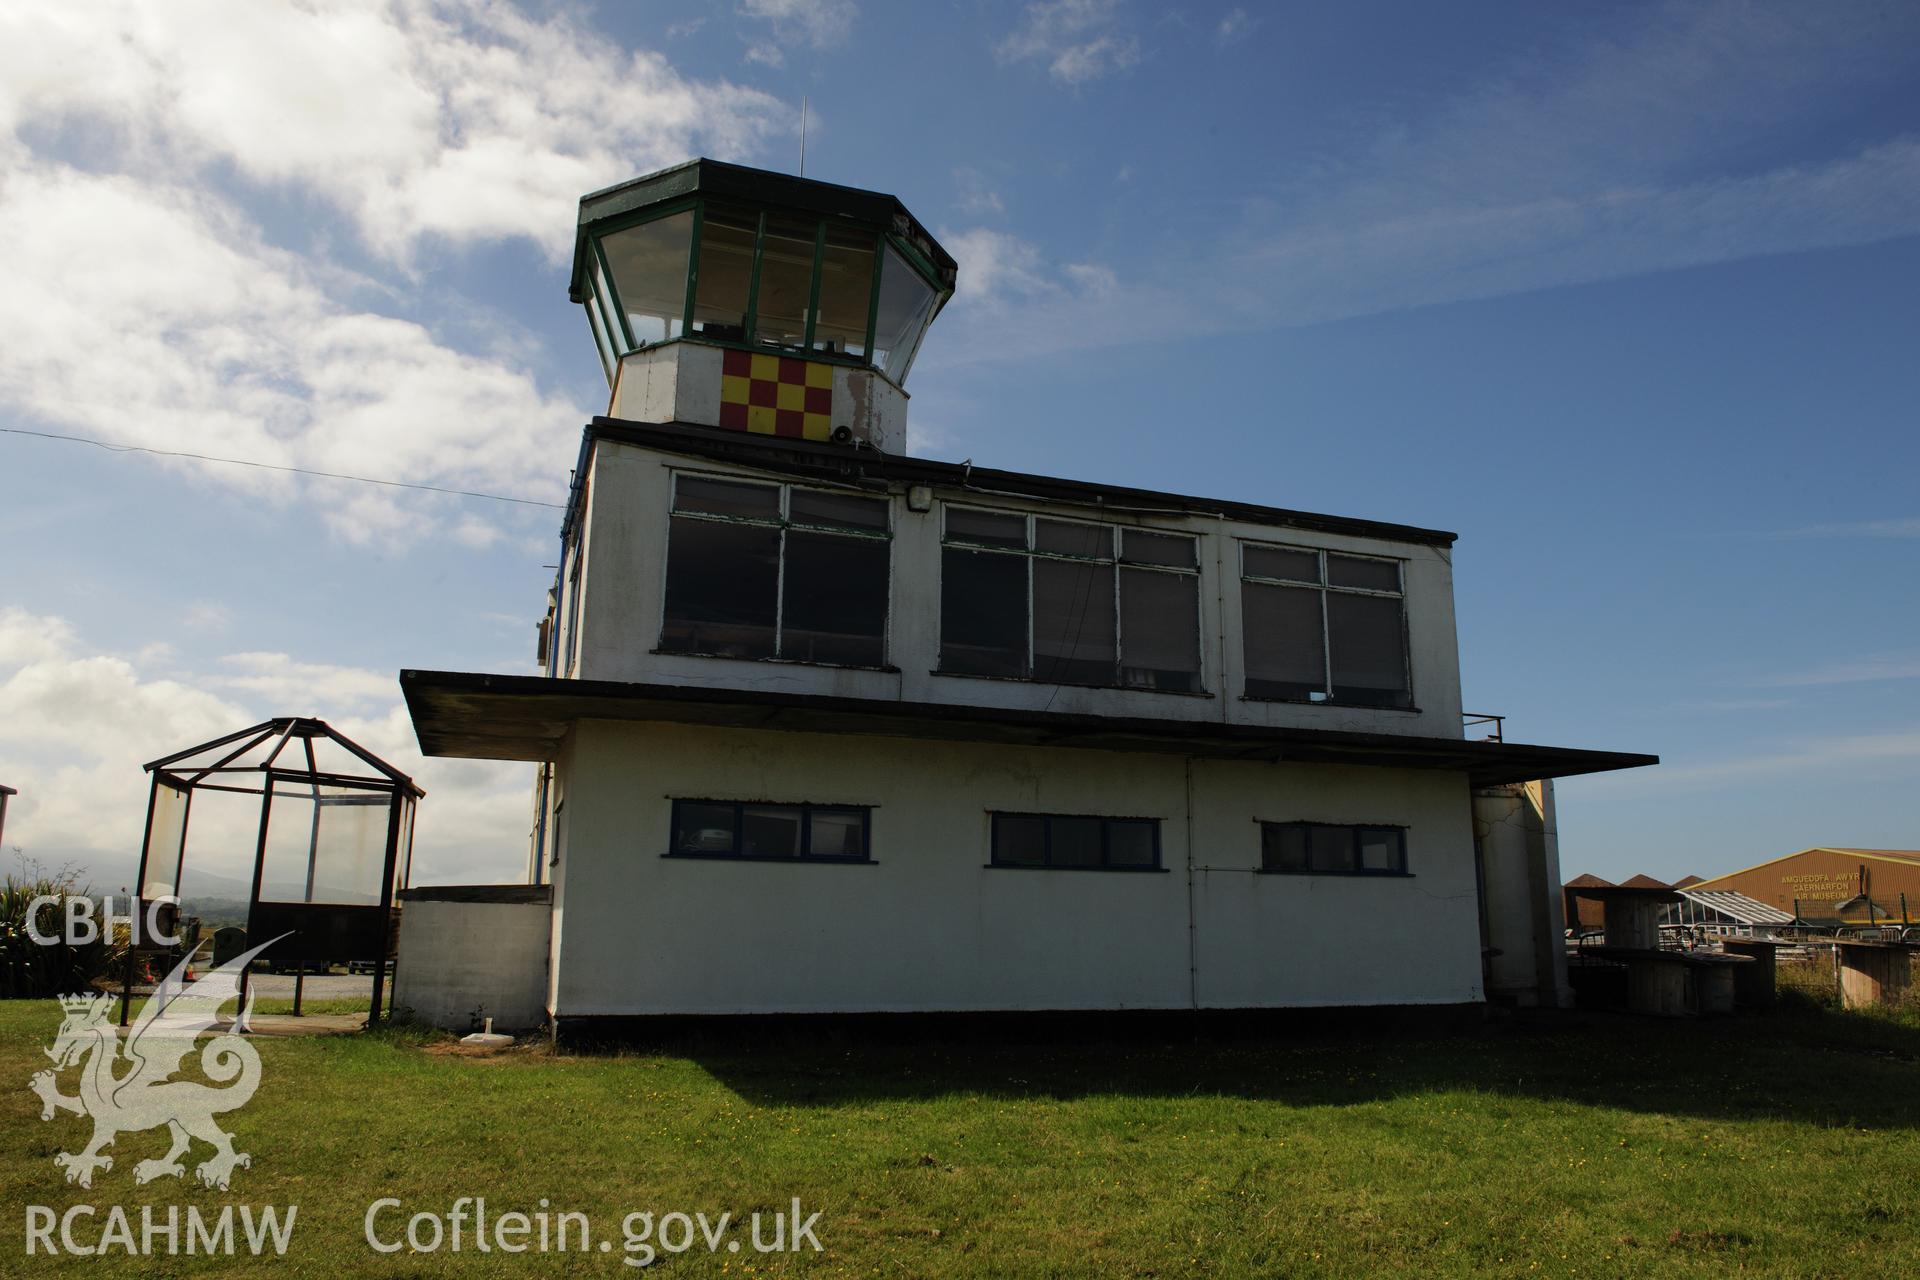 RAF Llandwrog, Caernarfon. Control Tower. External photographic survey prior to demolition.